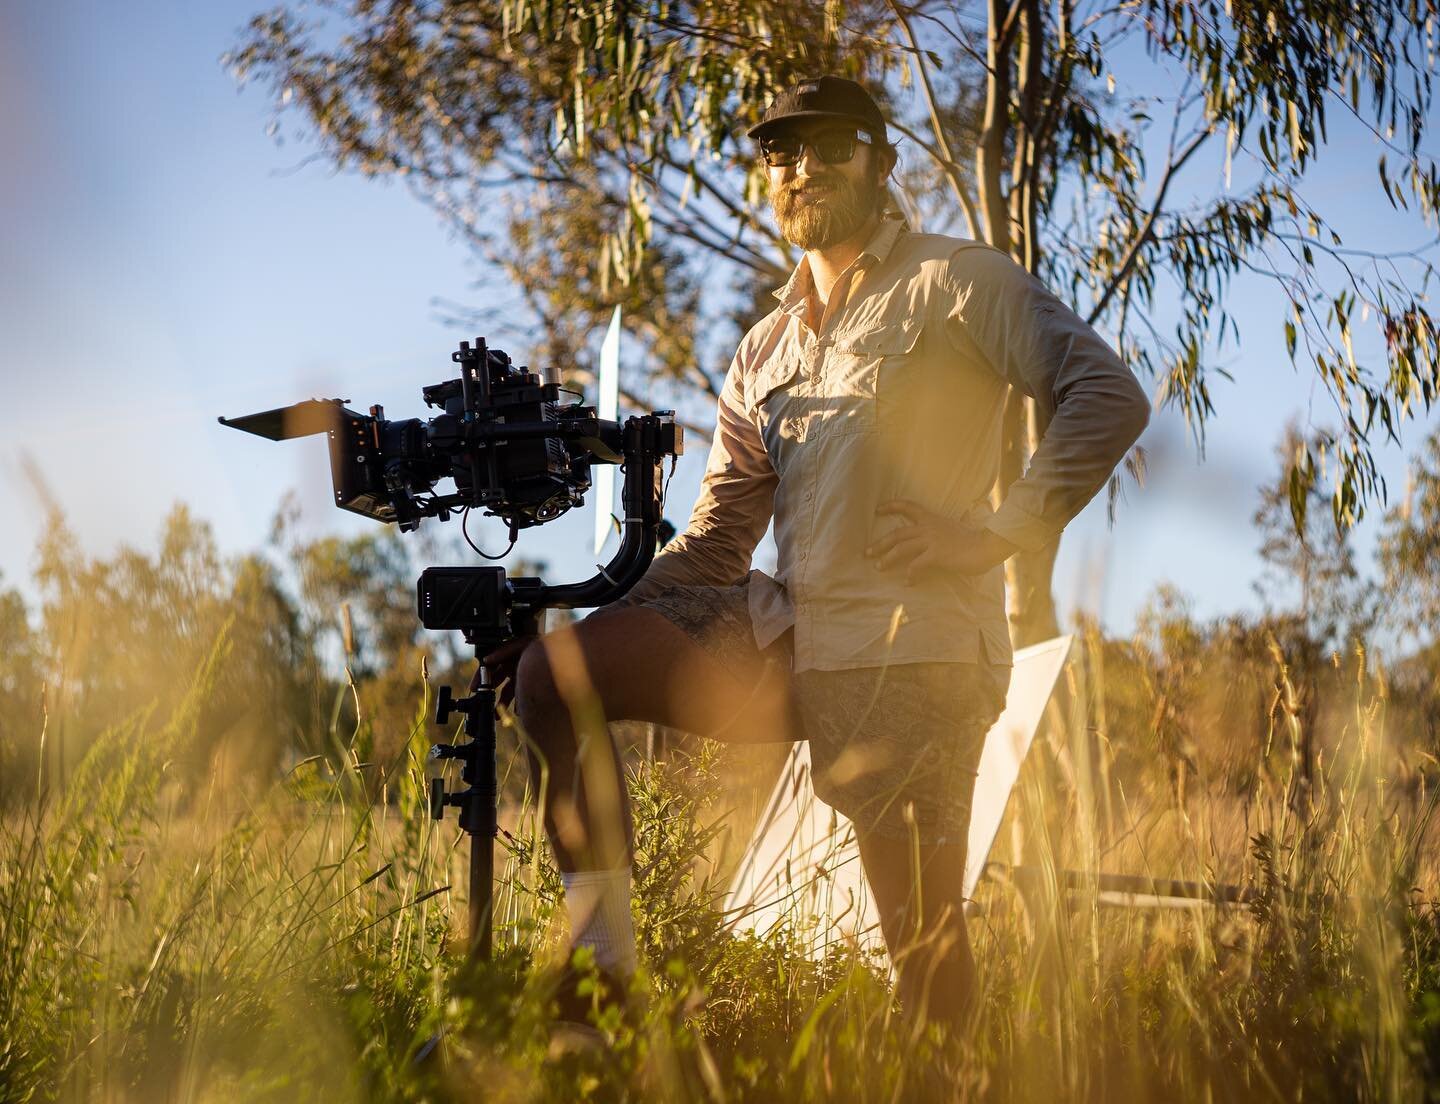 Just a man and a Movi. 

.
.
@brighttangerine @ignitedigiaustralia  #outback #australia #bush #alexa #movipro #cameraporn #sunsetmakeup